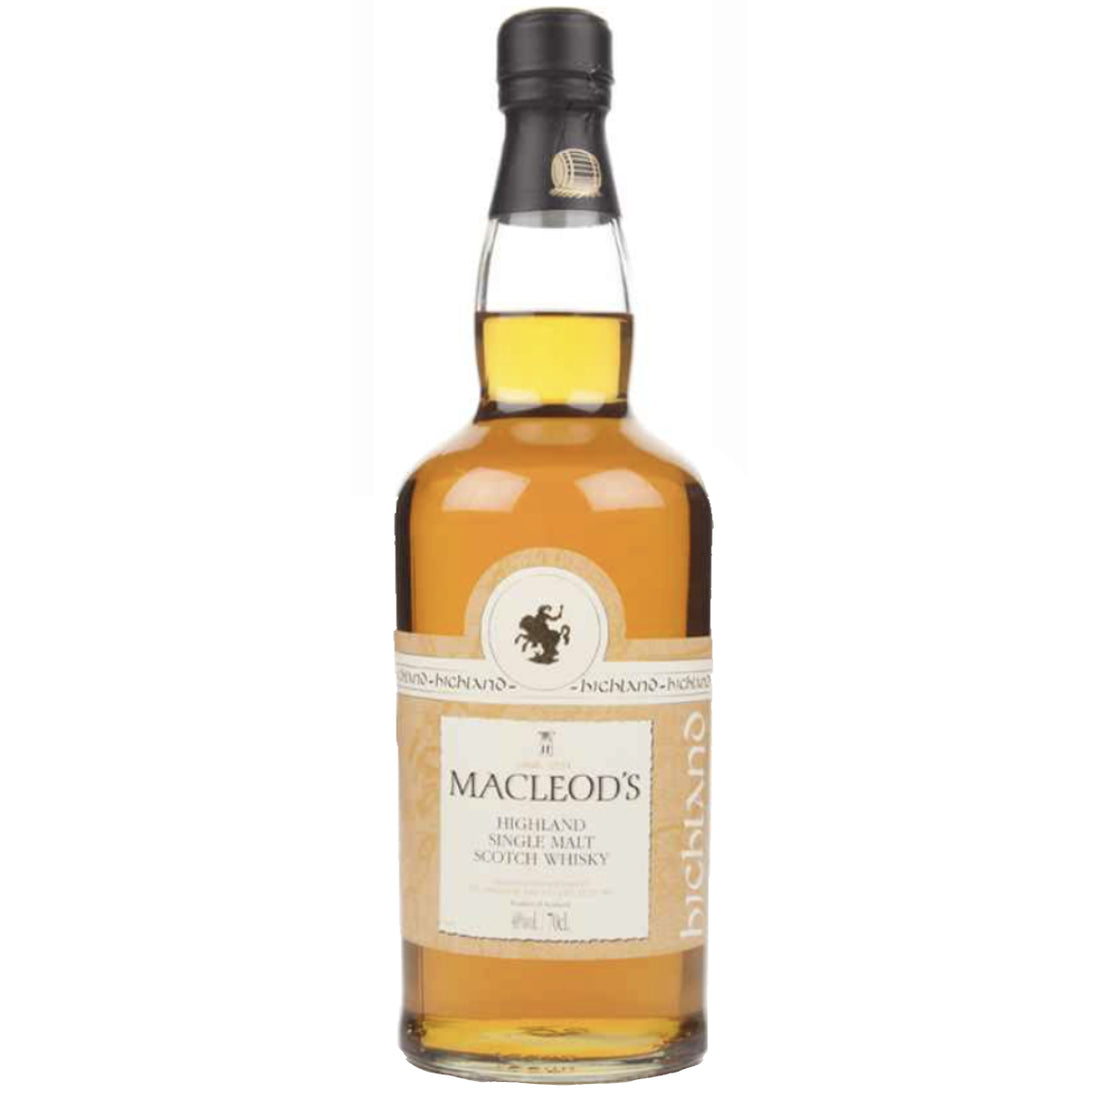 Macleod's Highland Single Malt Scotch Whisky (Ian Macleod)